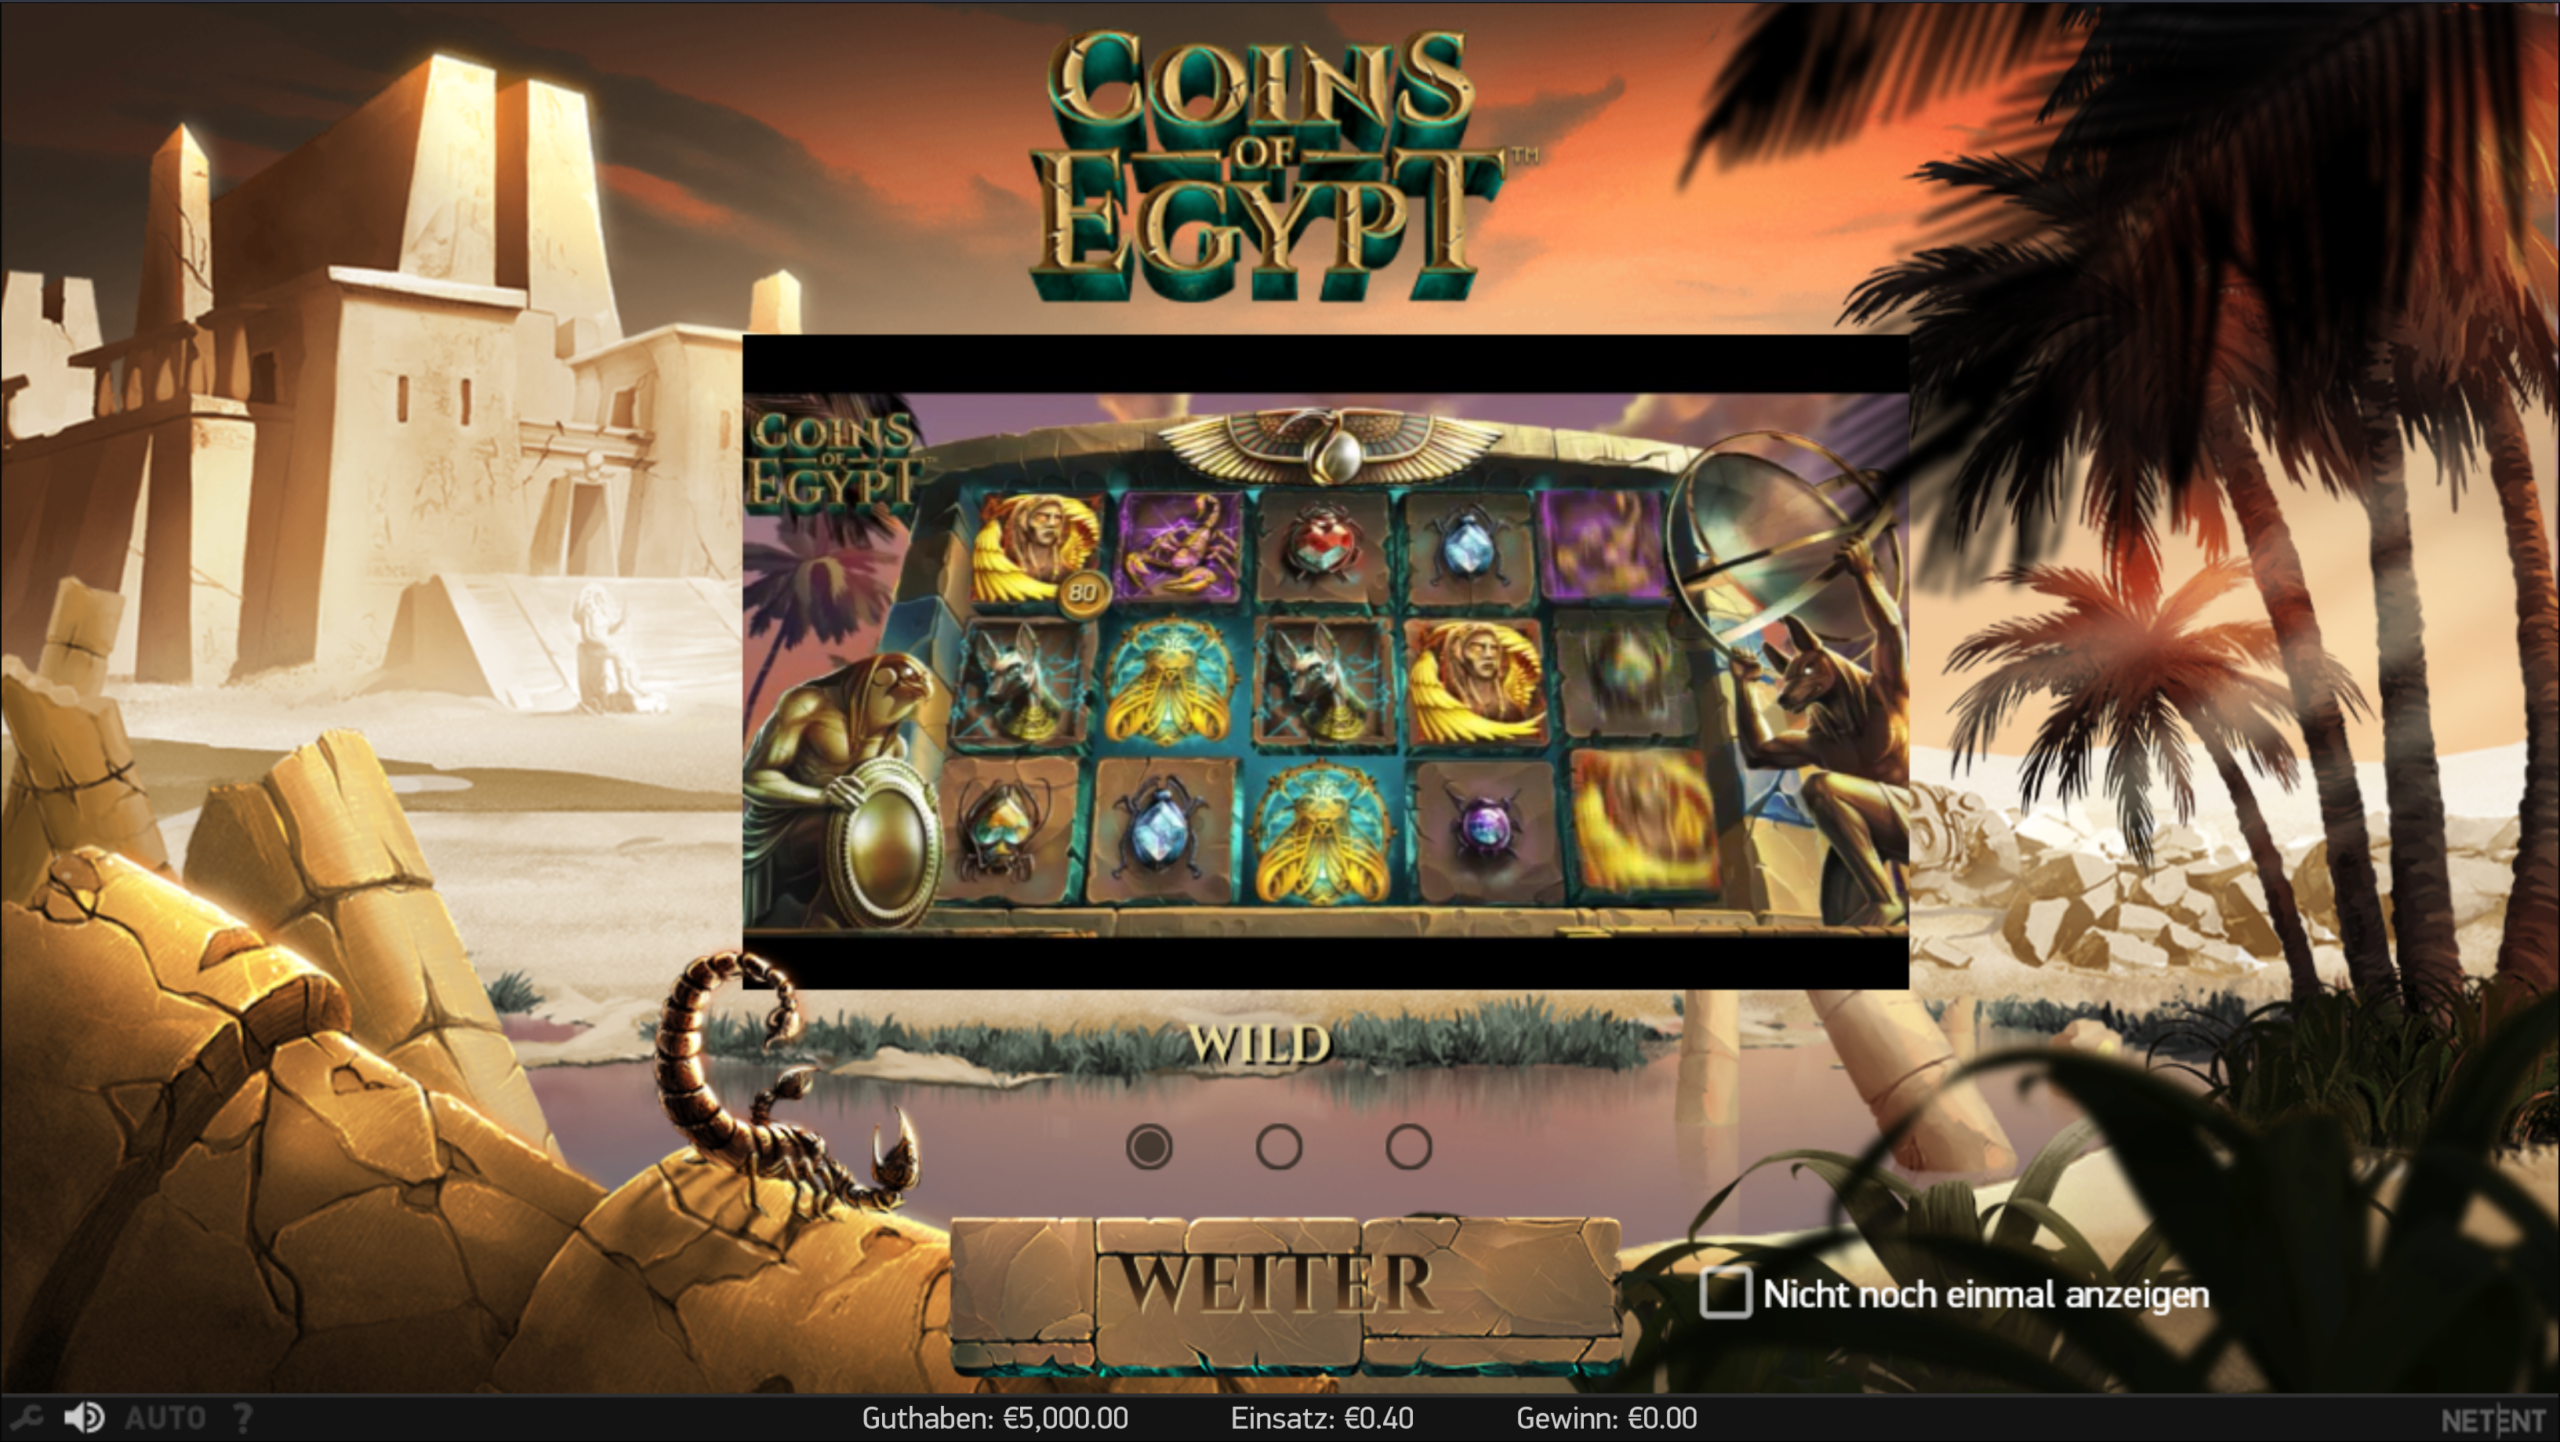 Coins of Egypt – Gewinne die verschlossenen Schatztruhen